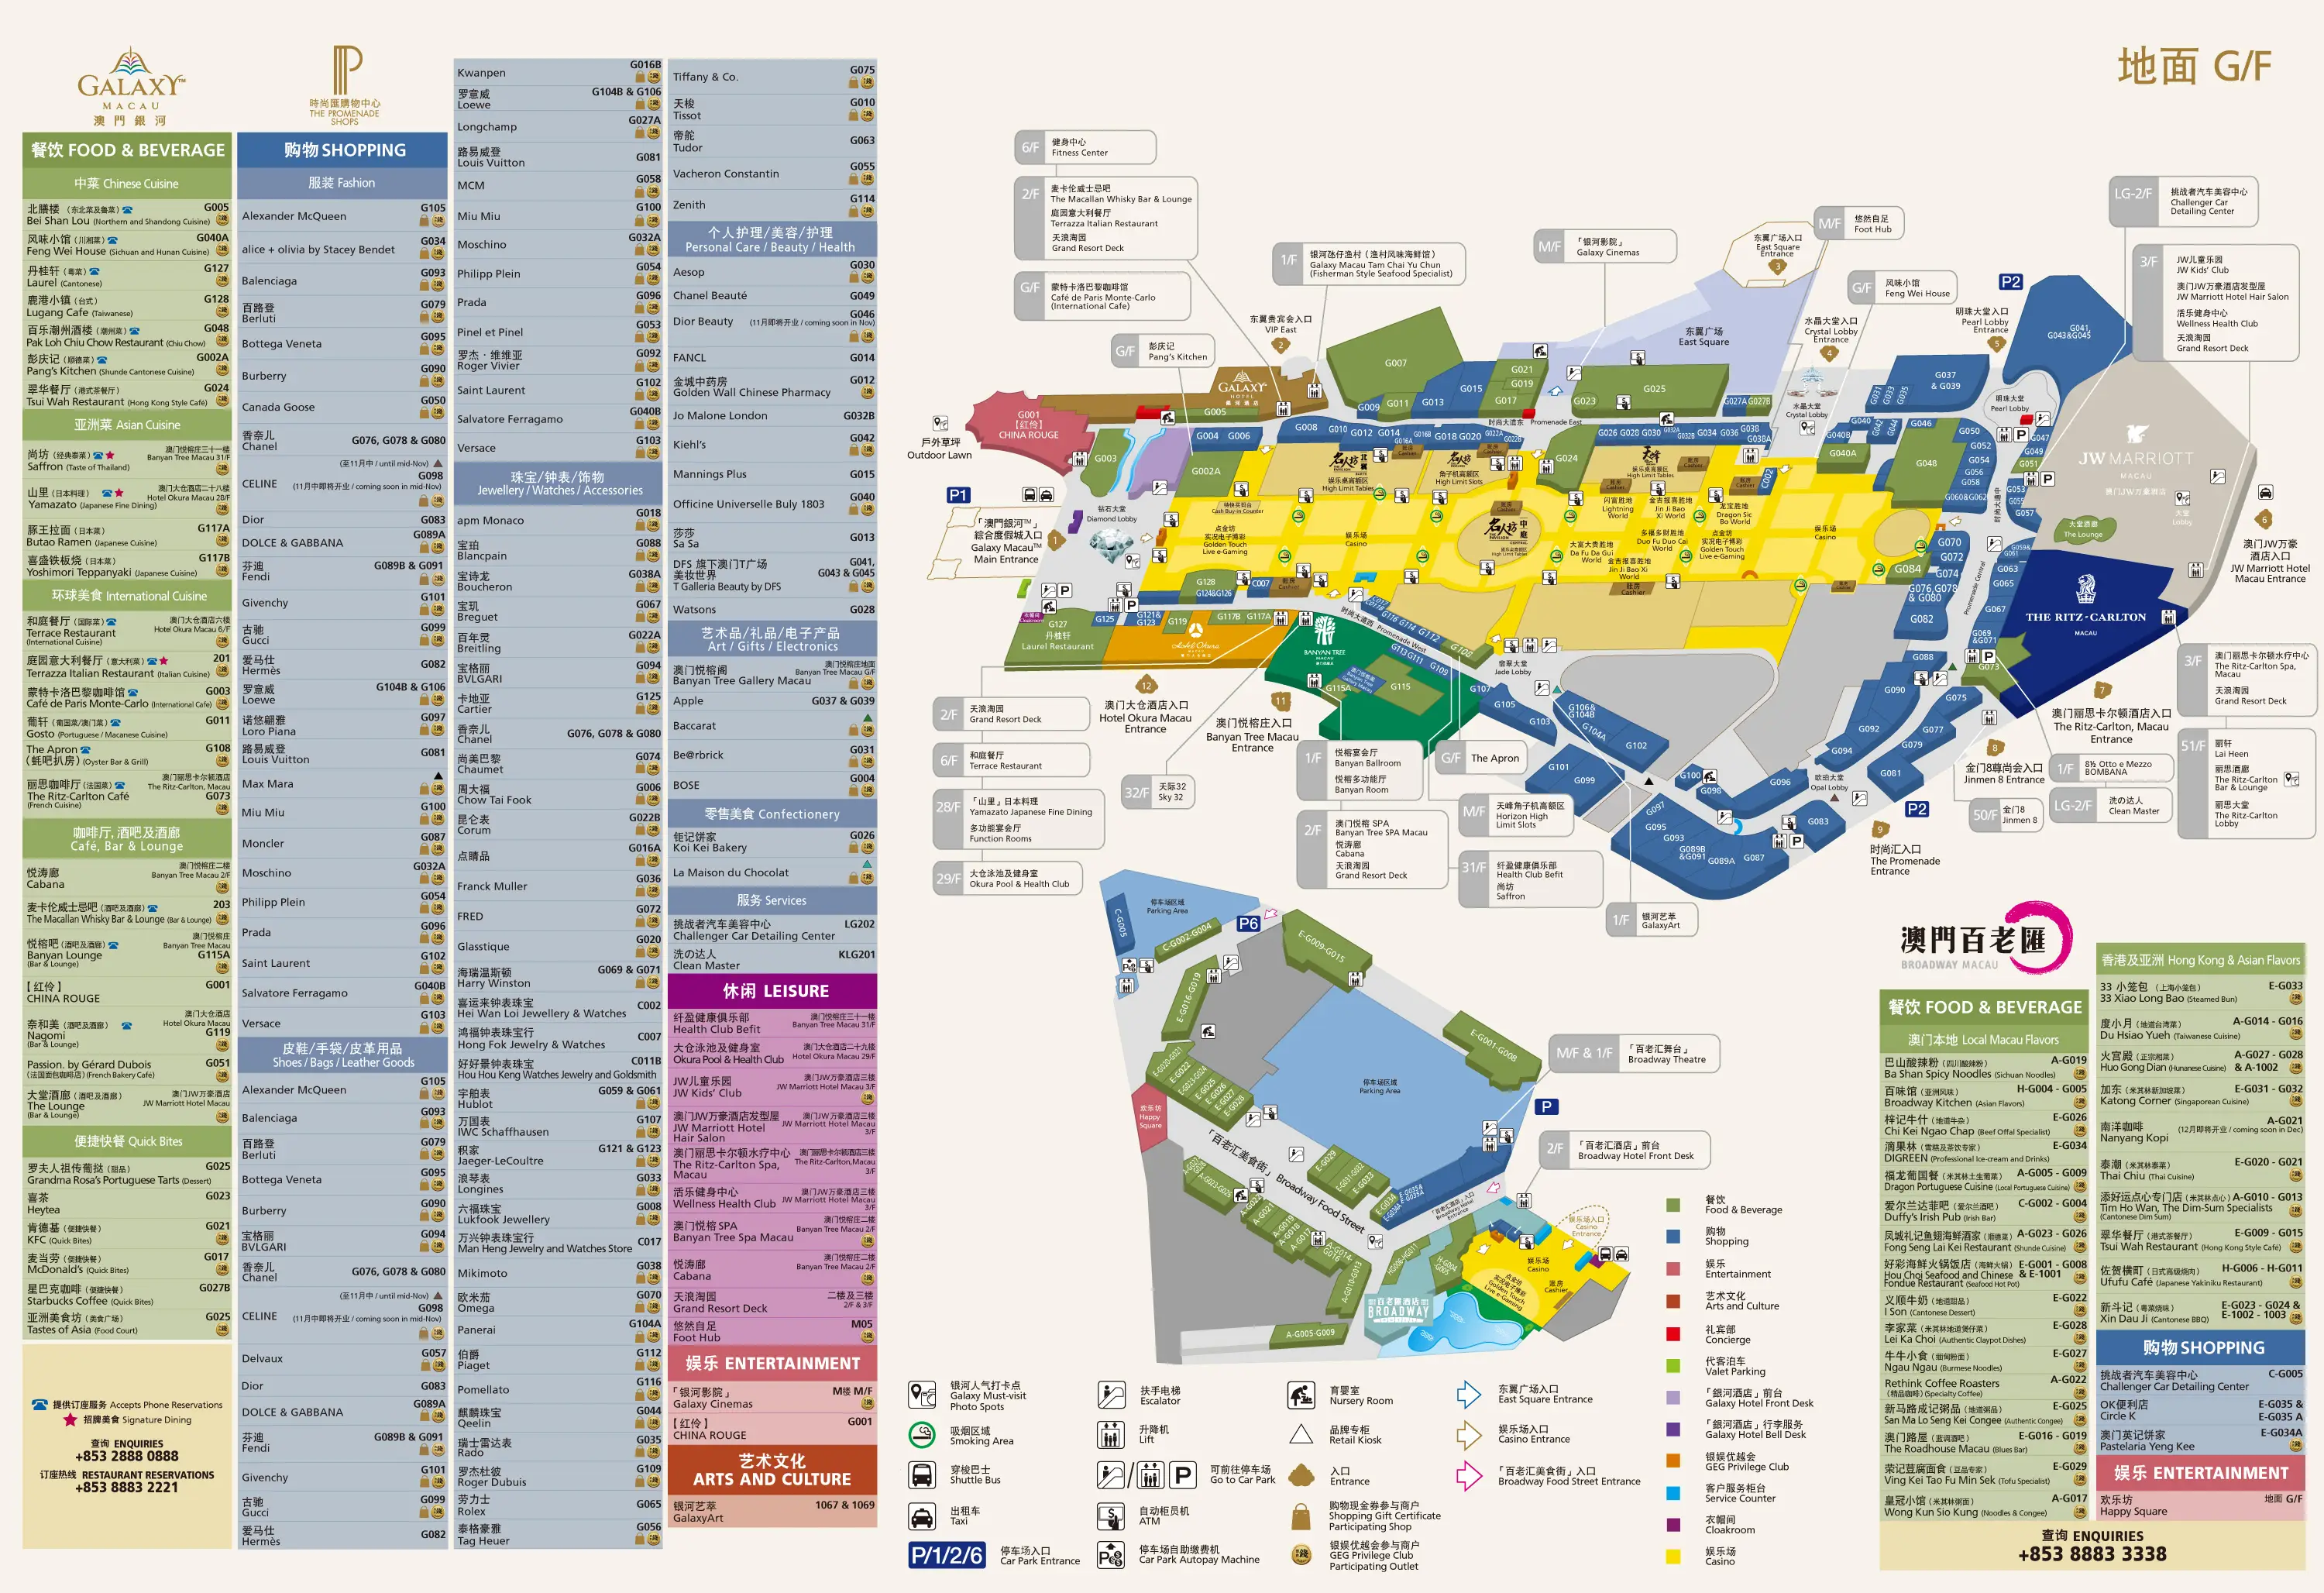 Galaxy Macau Integrated Resorts Map